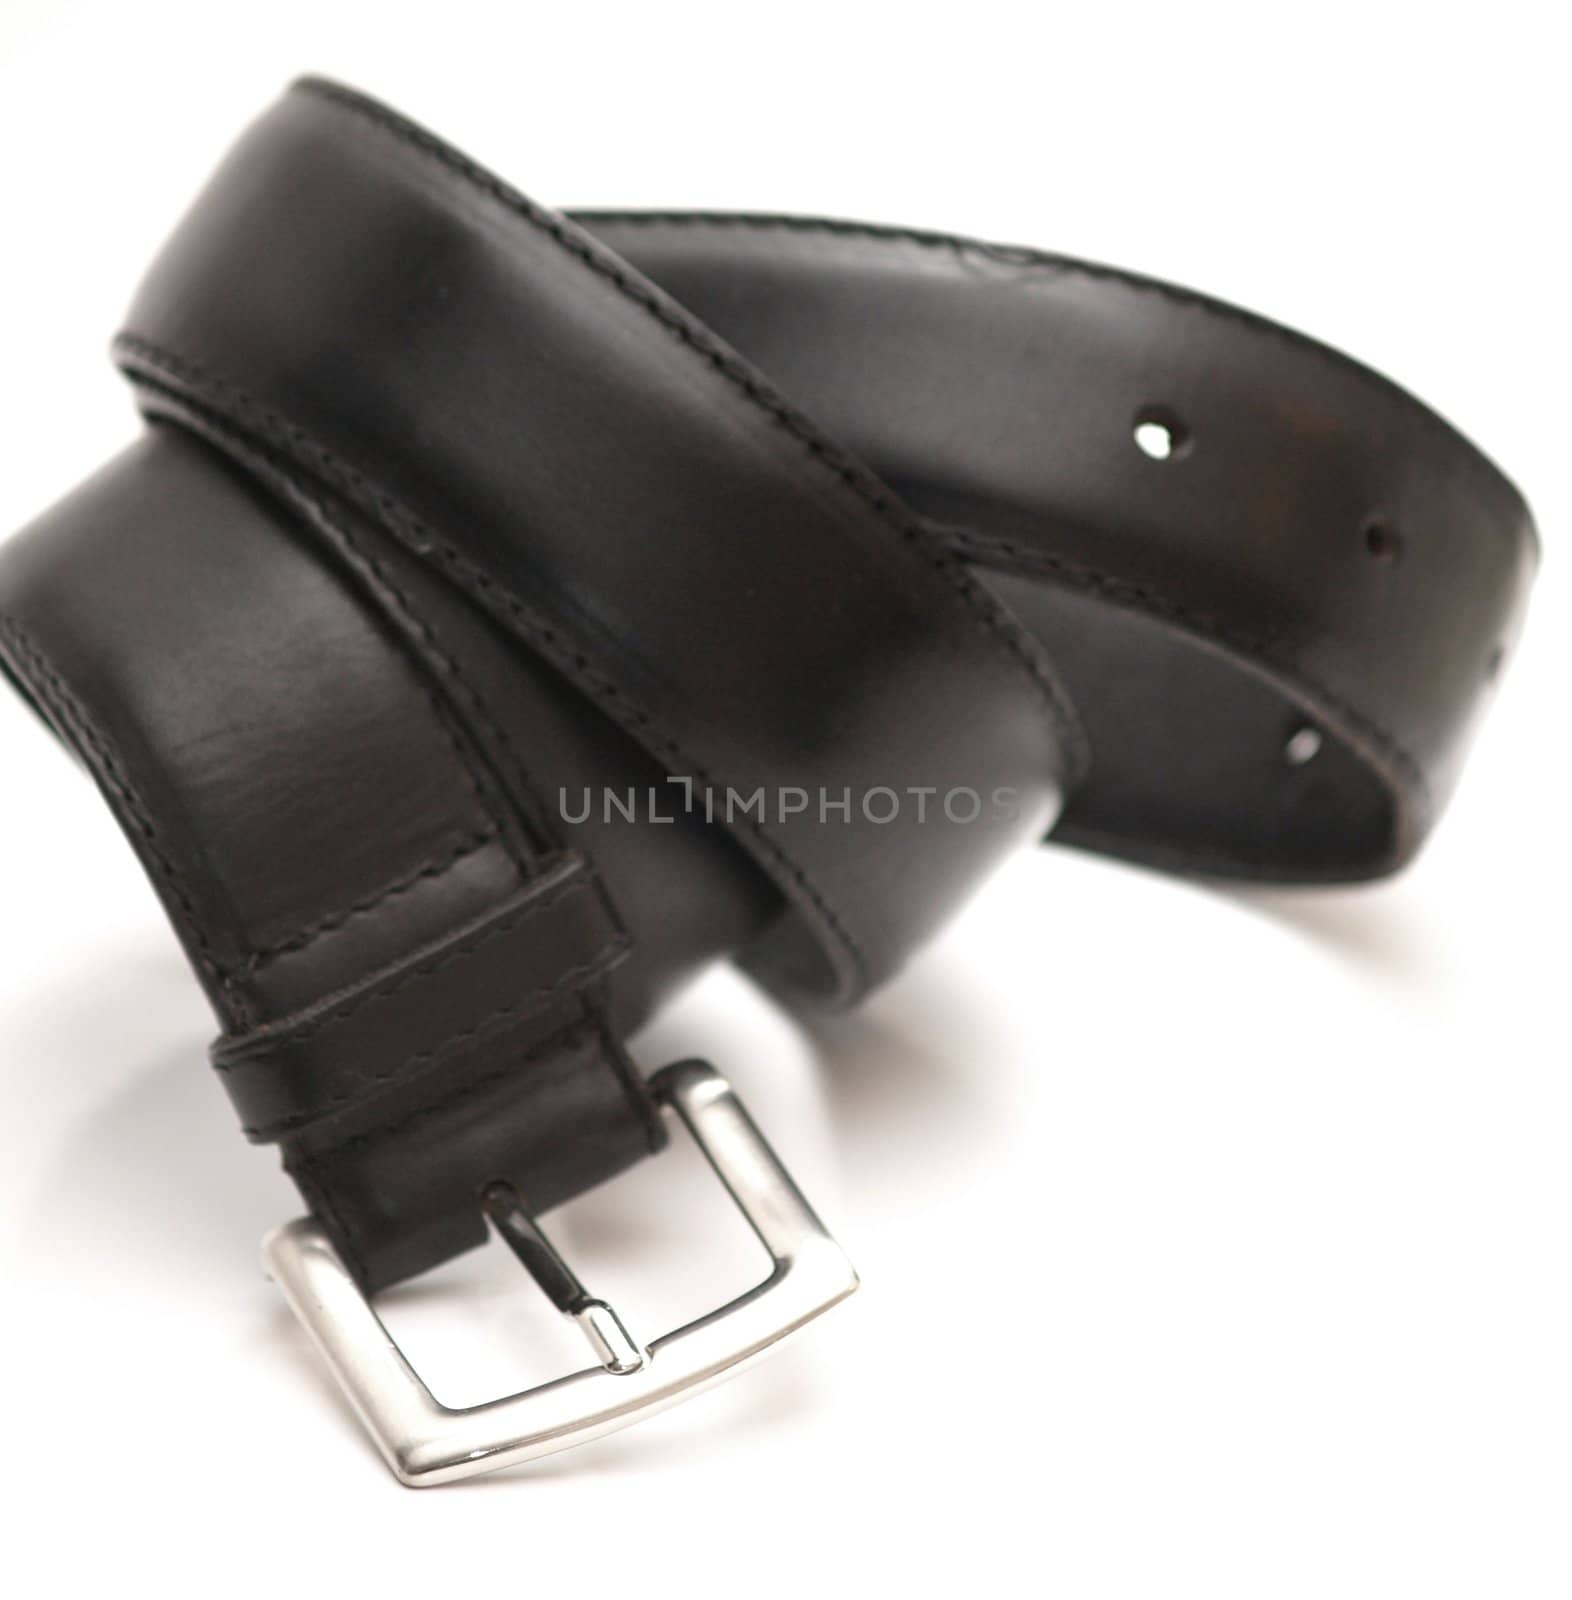 Black leather belt on white background 